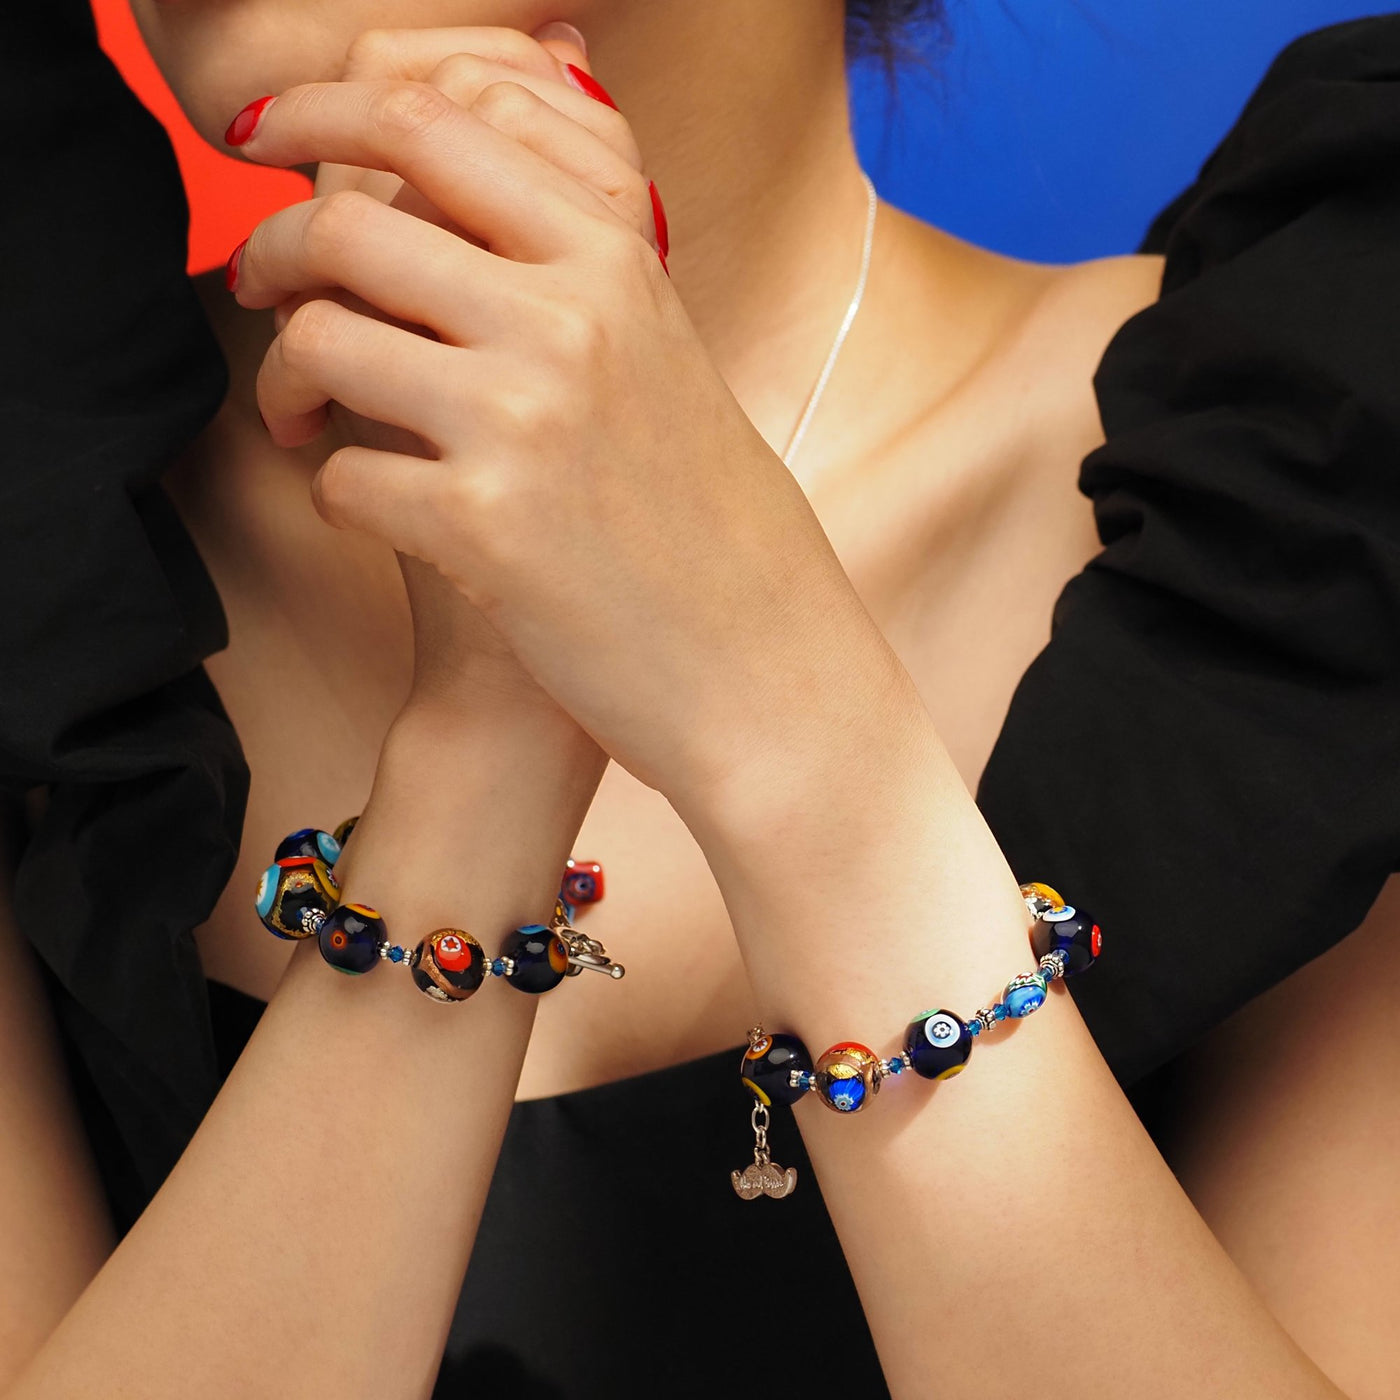 Artylish x oo Bracelet - Special Edition - Medium - Bracelet